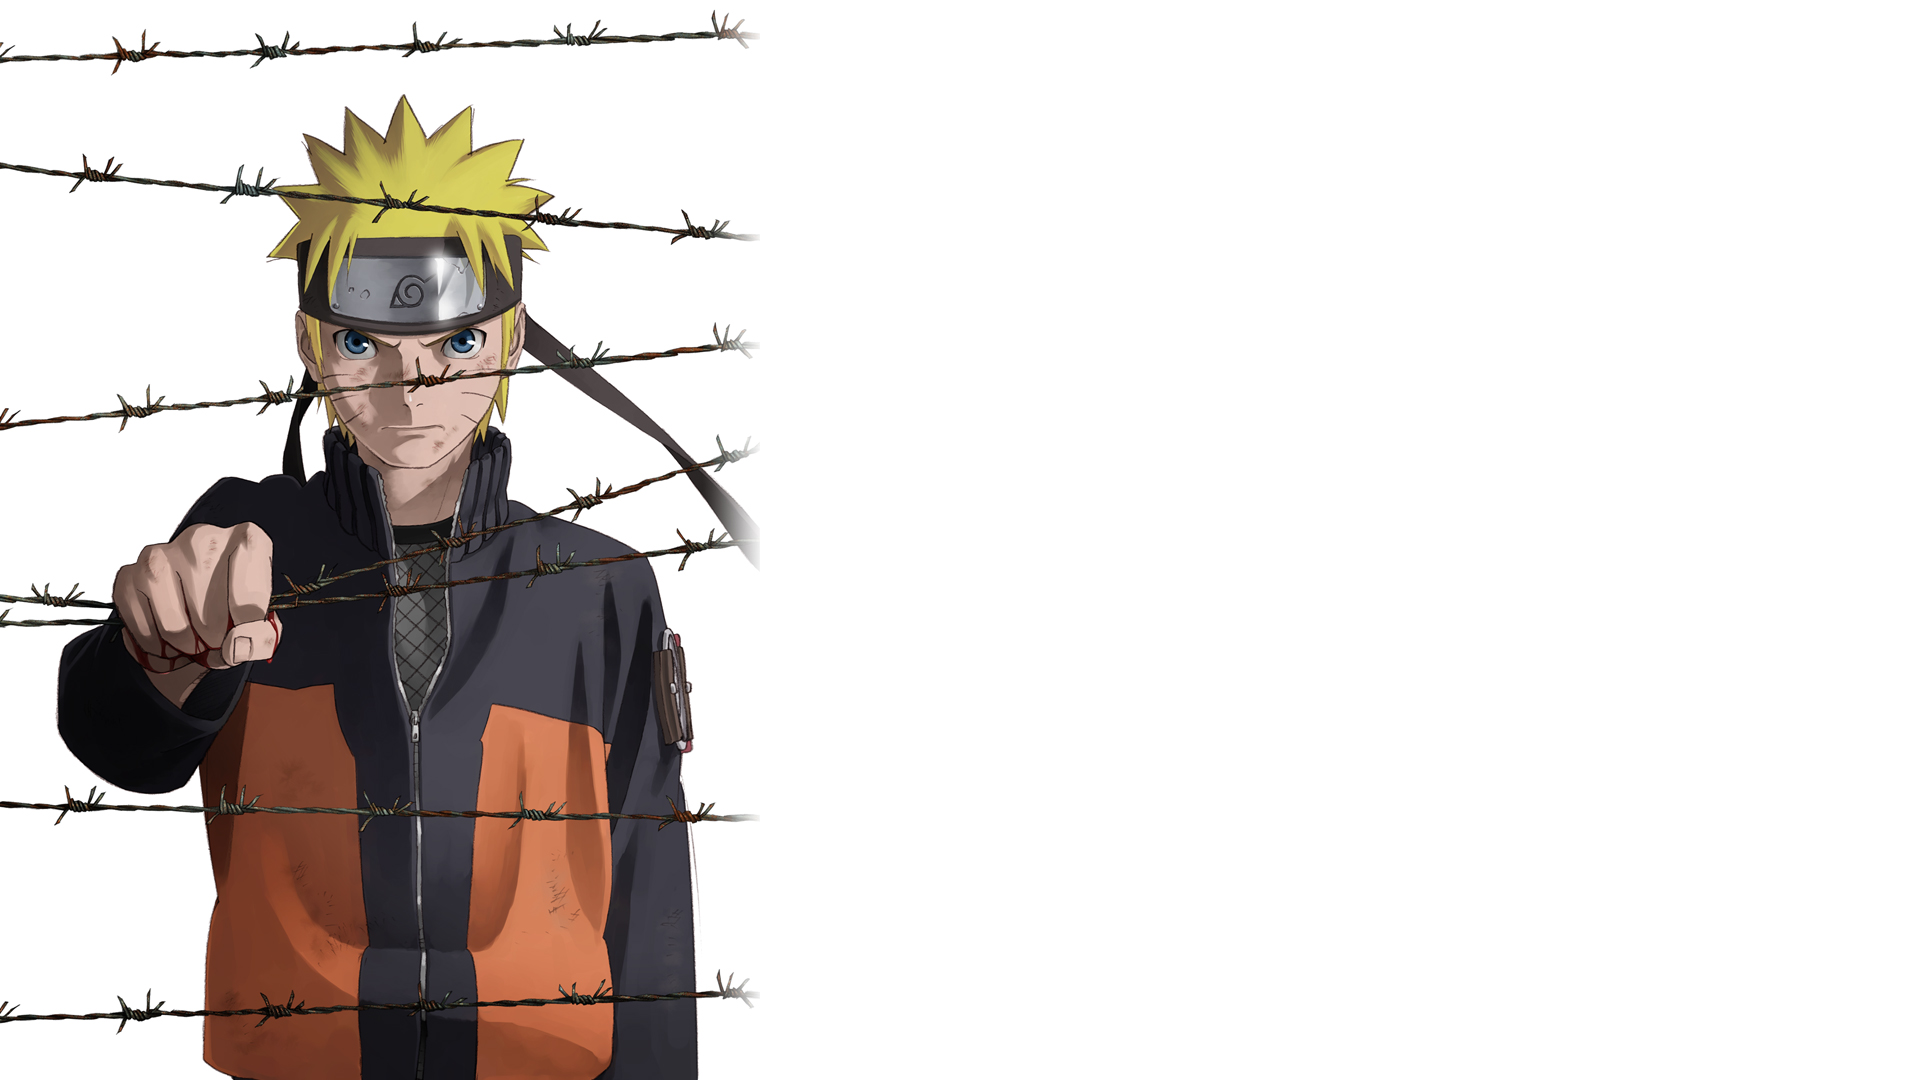 Filme 5 – Naruto Shippuden – Blood Prison